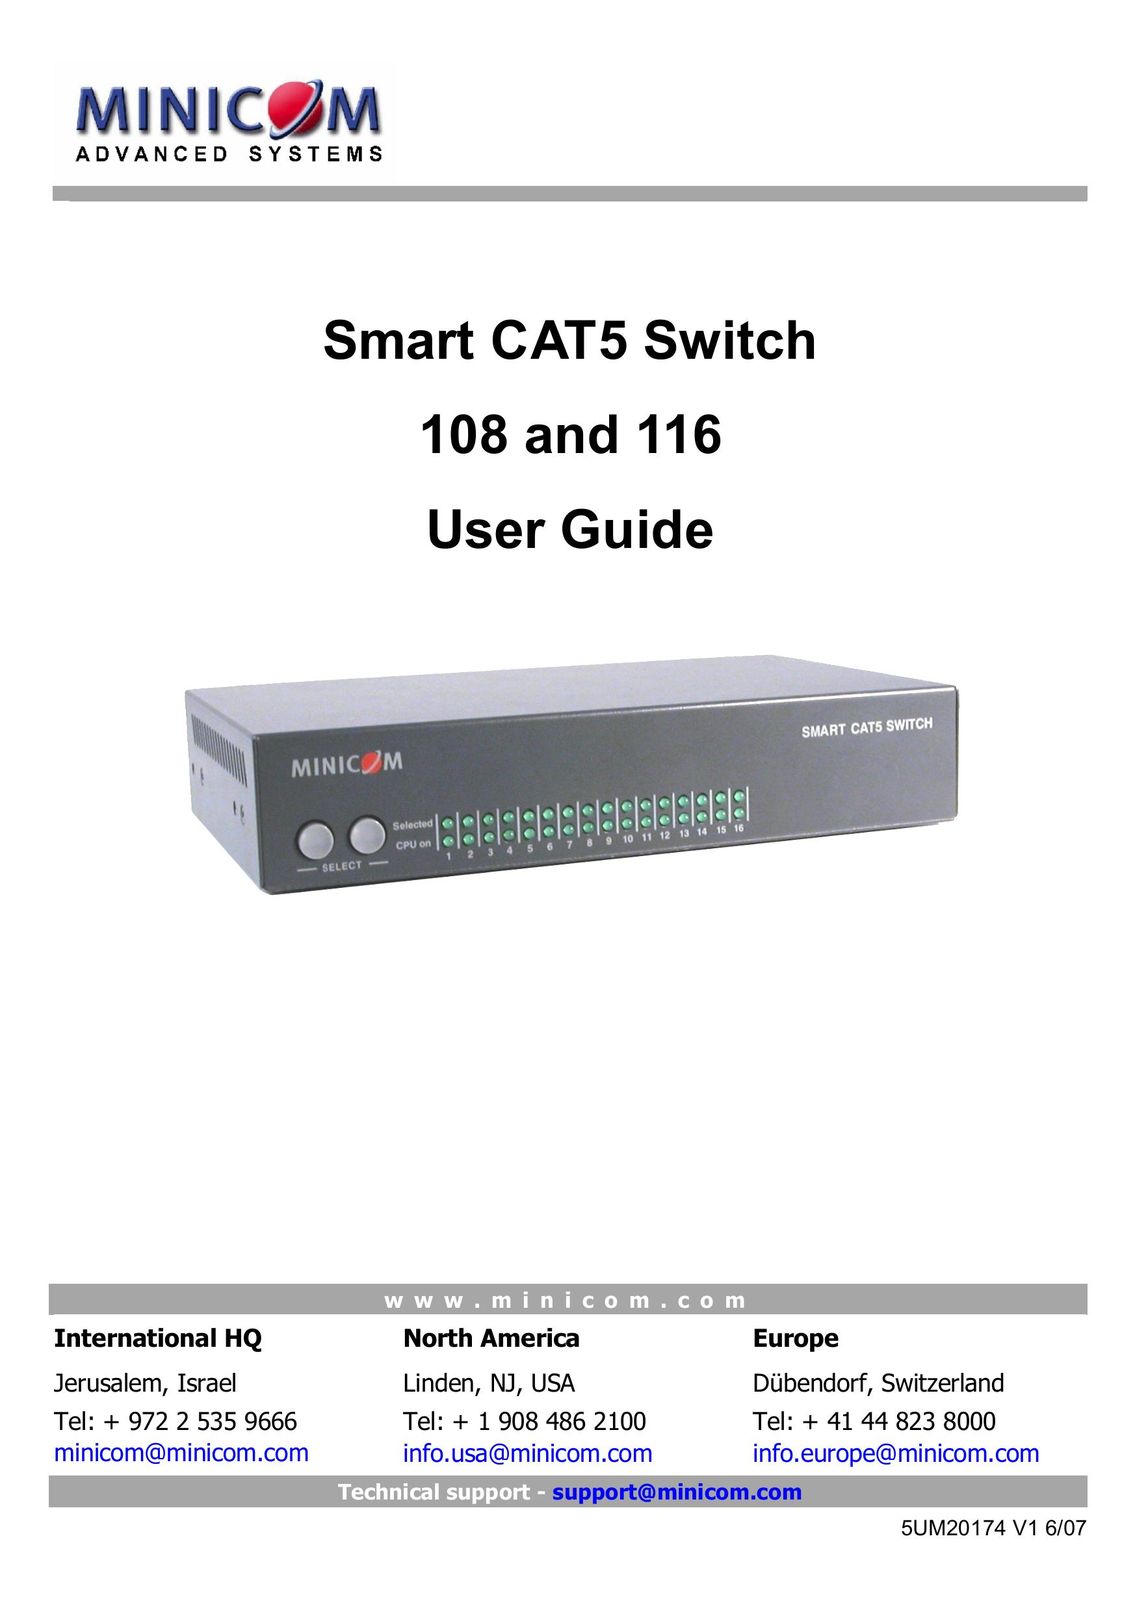 Minicom Advanced Systems Smart CAT5 Switch User Manual